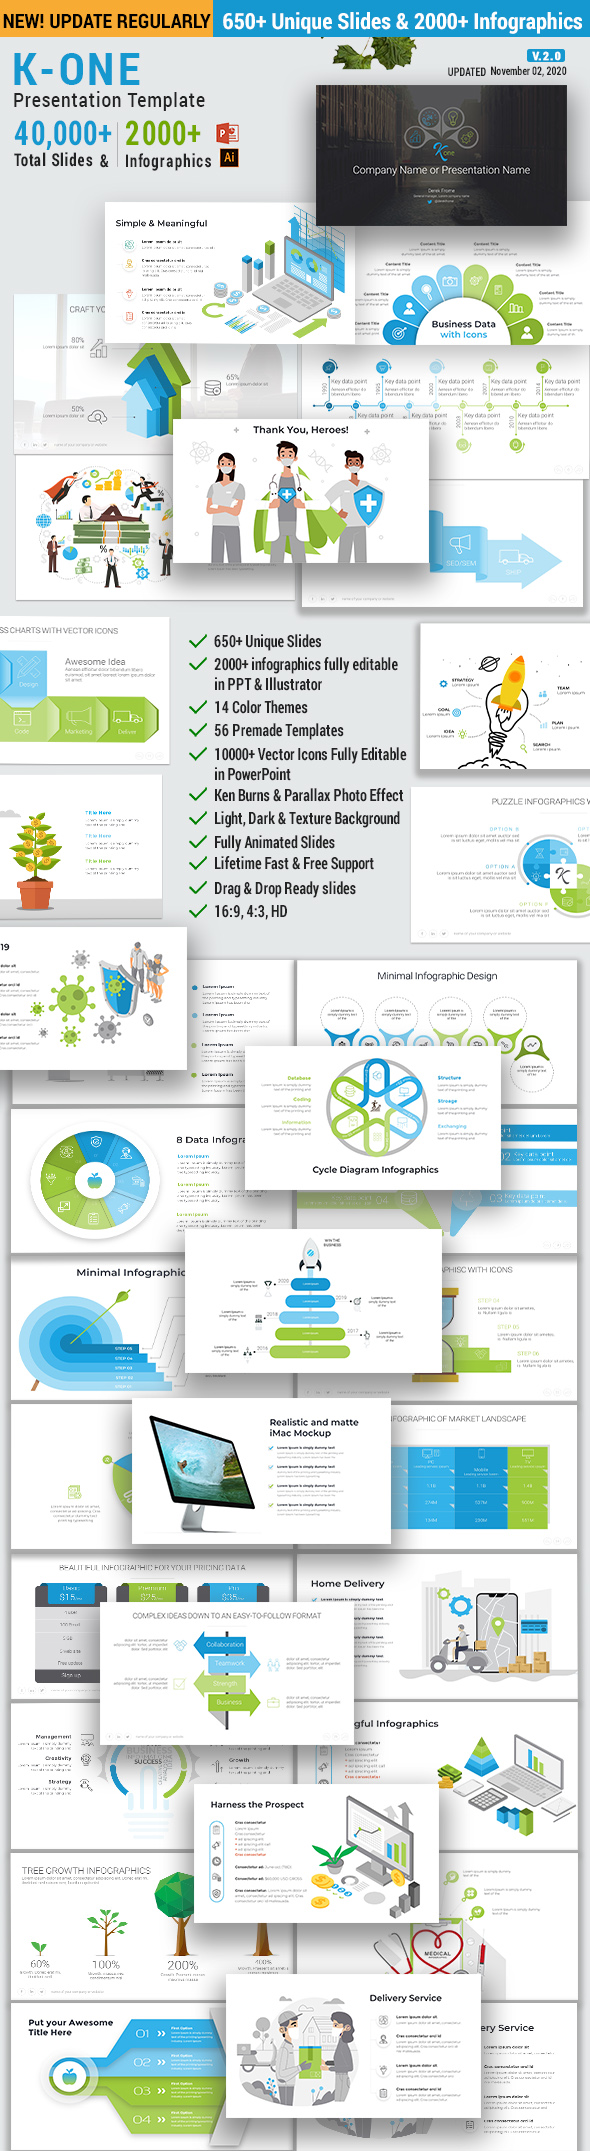 K-One Presentation Template & Infographics Pack v.2.0 - Updated!